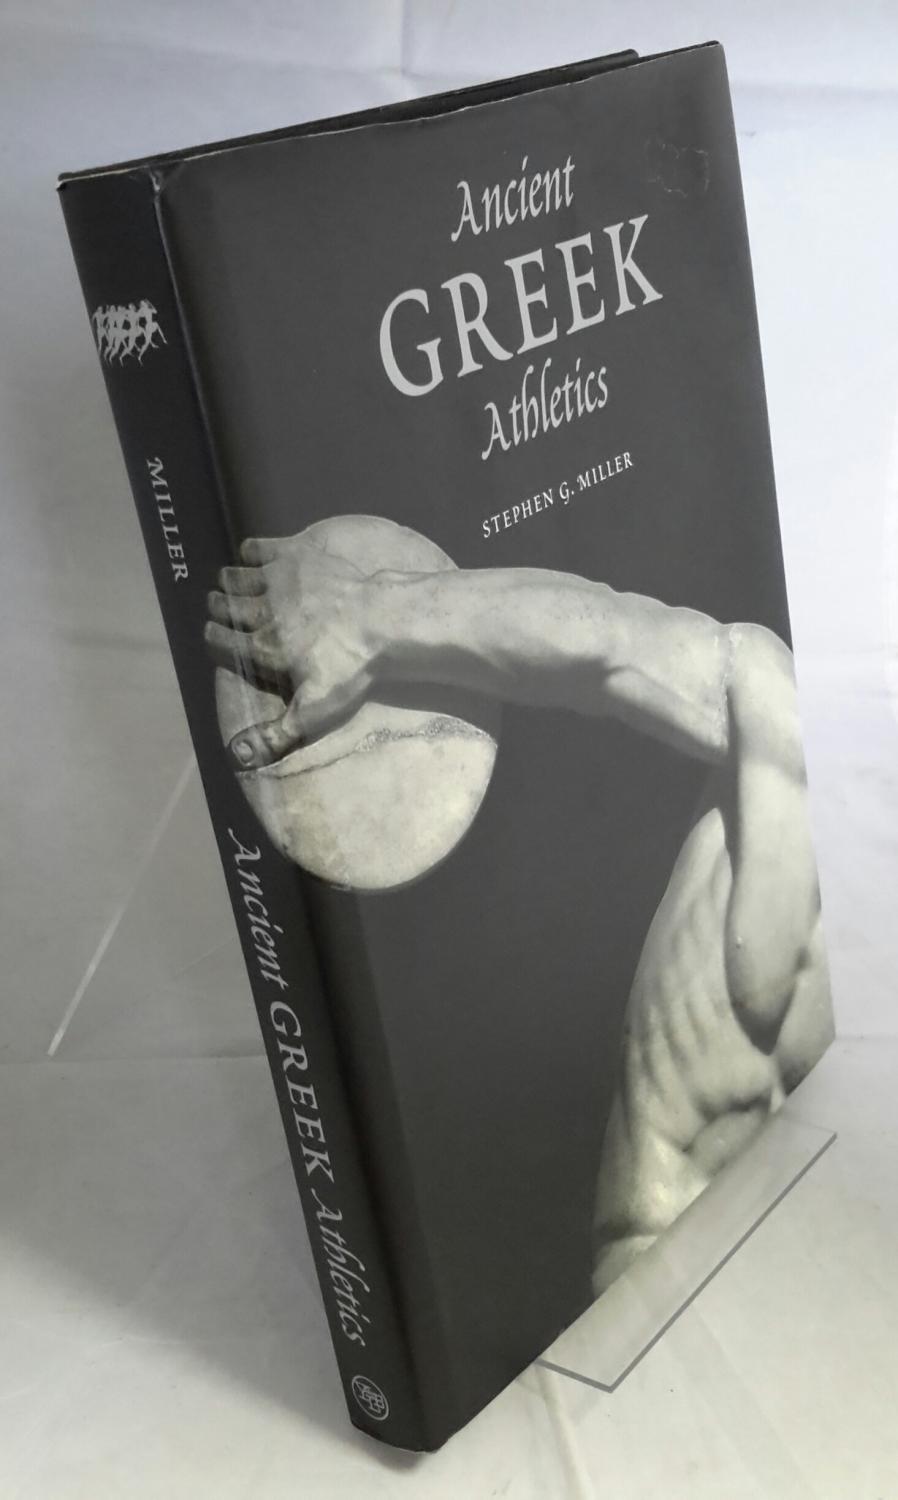 Ancient Greek Athletics. - MILLER, Stephen G.